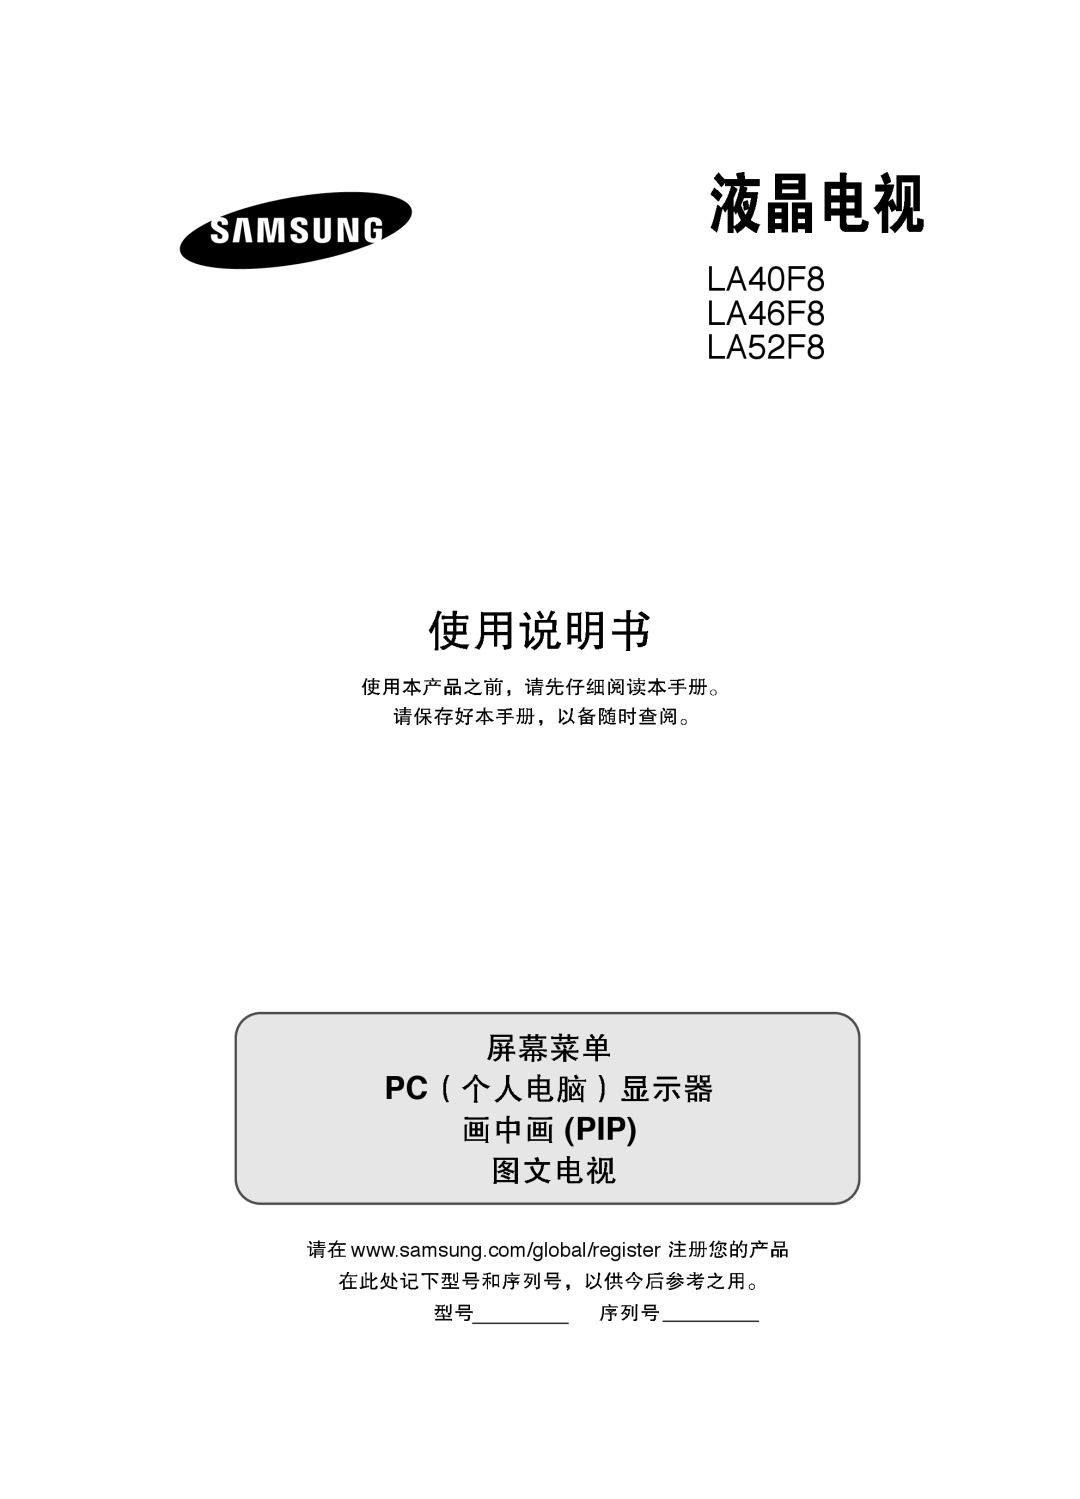 Samsung manual LA40F8 LA46F8 LA52F8, Pc Pip 